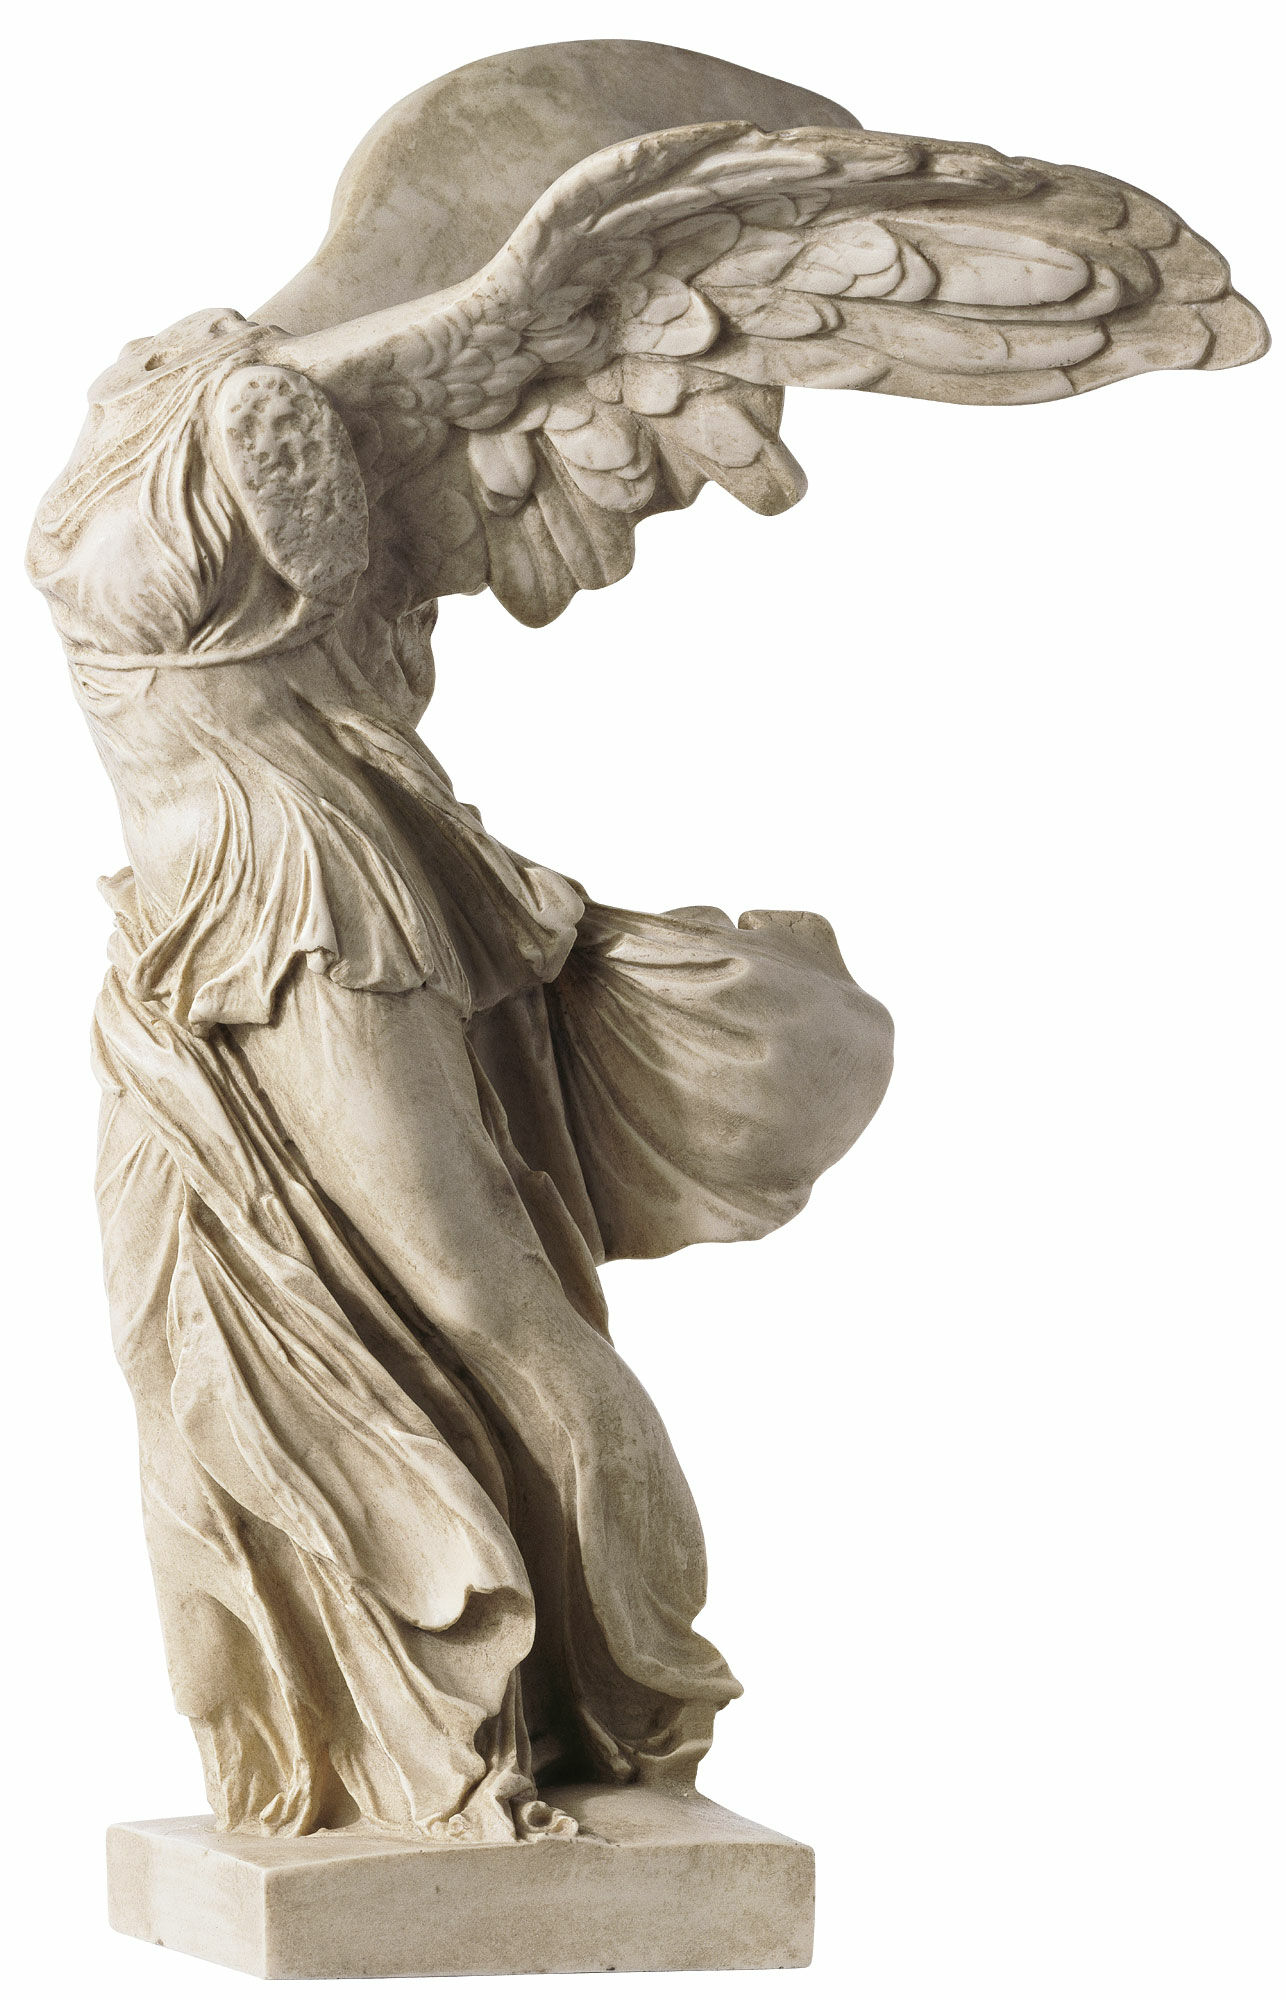 Skulptur "Nike fra Samothrake" (33 cm), støbt